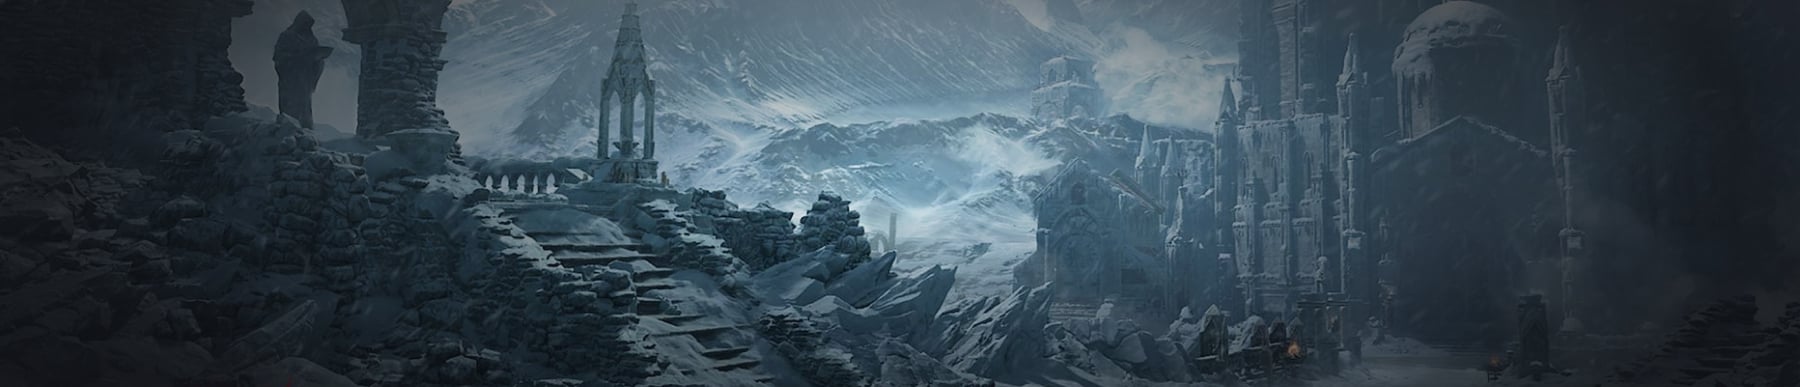 Diablo 4 Will Have a Pinnacle Final Boss Encounter Requiring the Best Gear